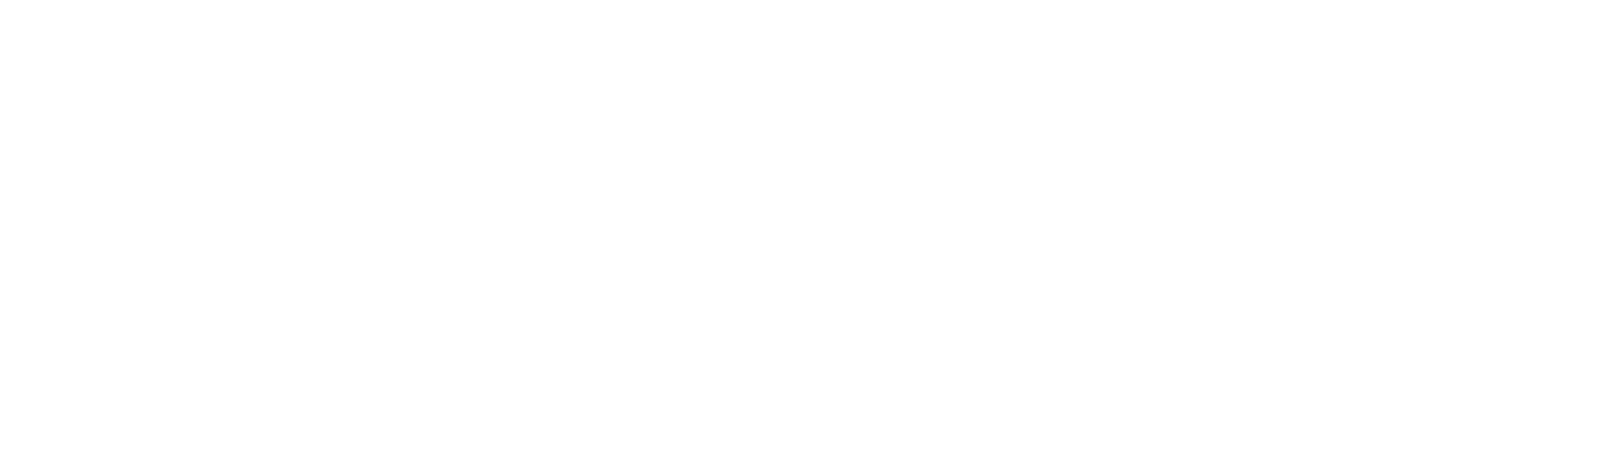 Pixotope Education Program logo